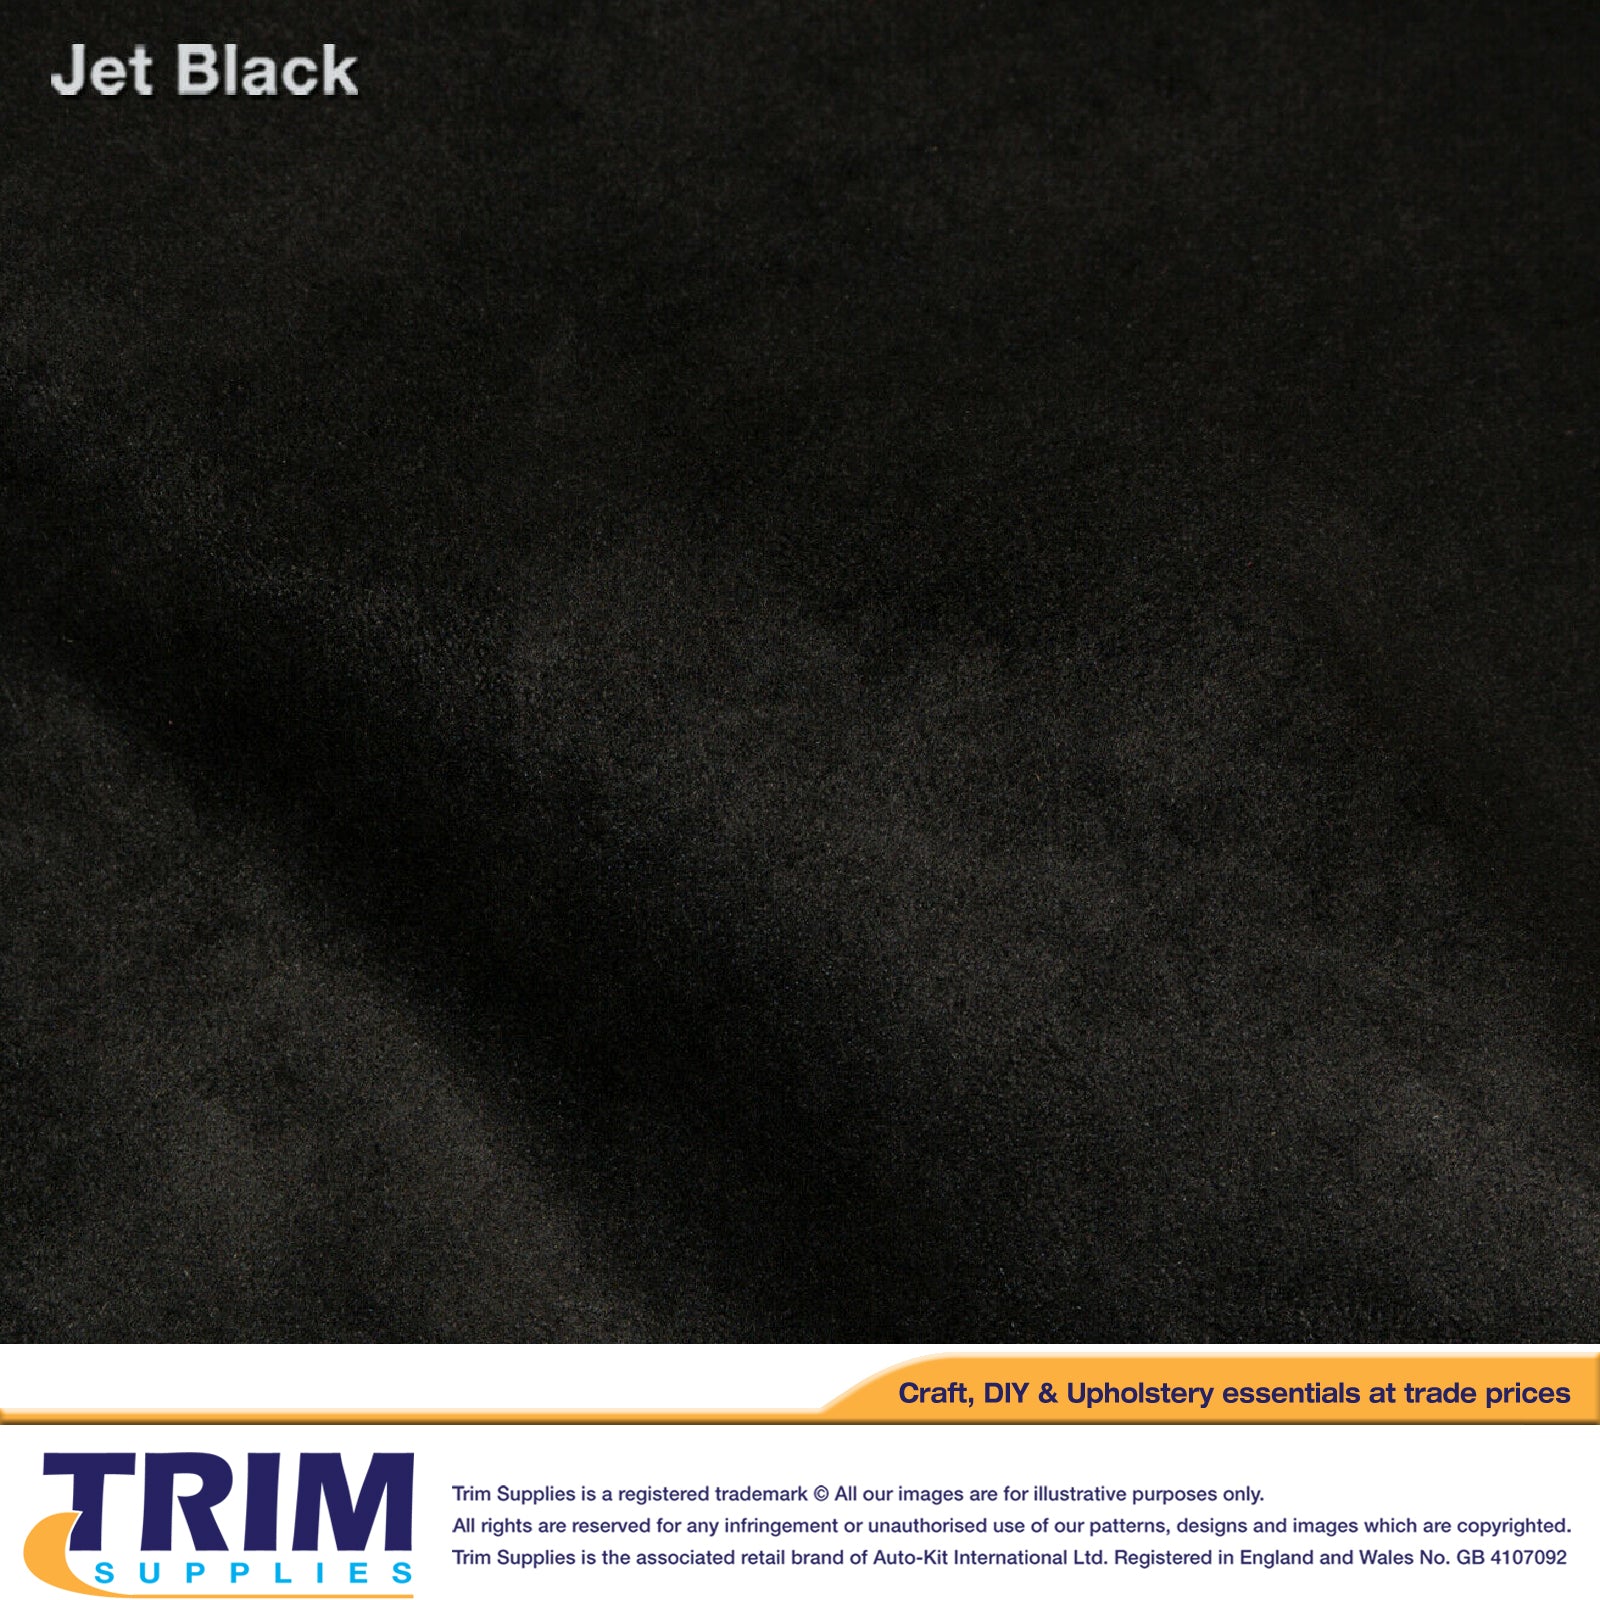 Premium Ultrafine Suedetara Suedette Material - Black Backing - £7.50 / Metre